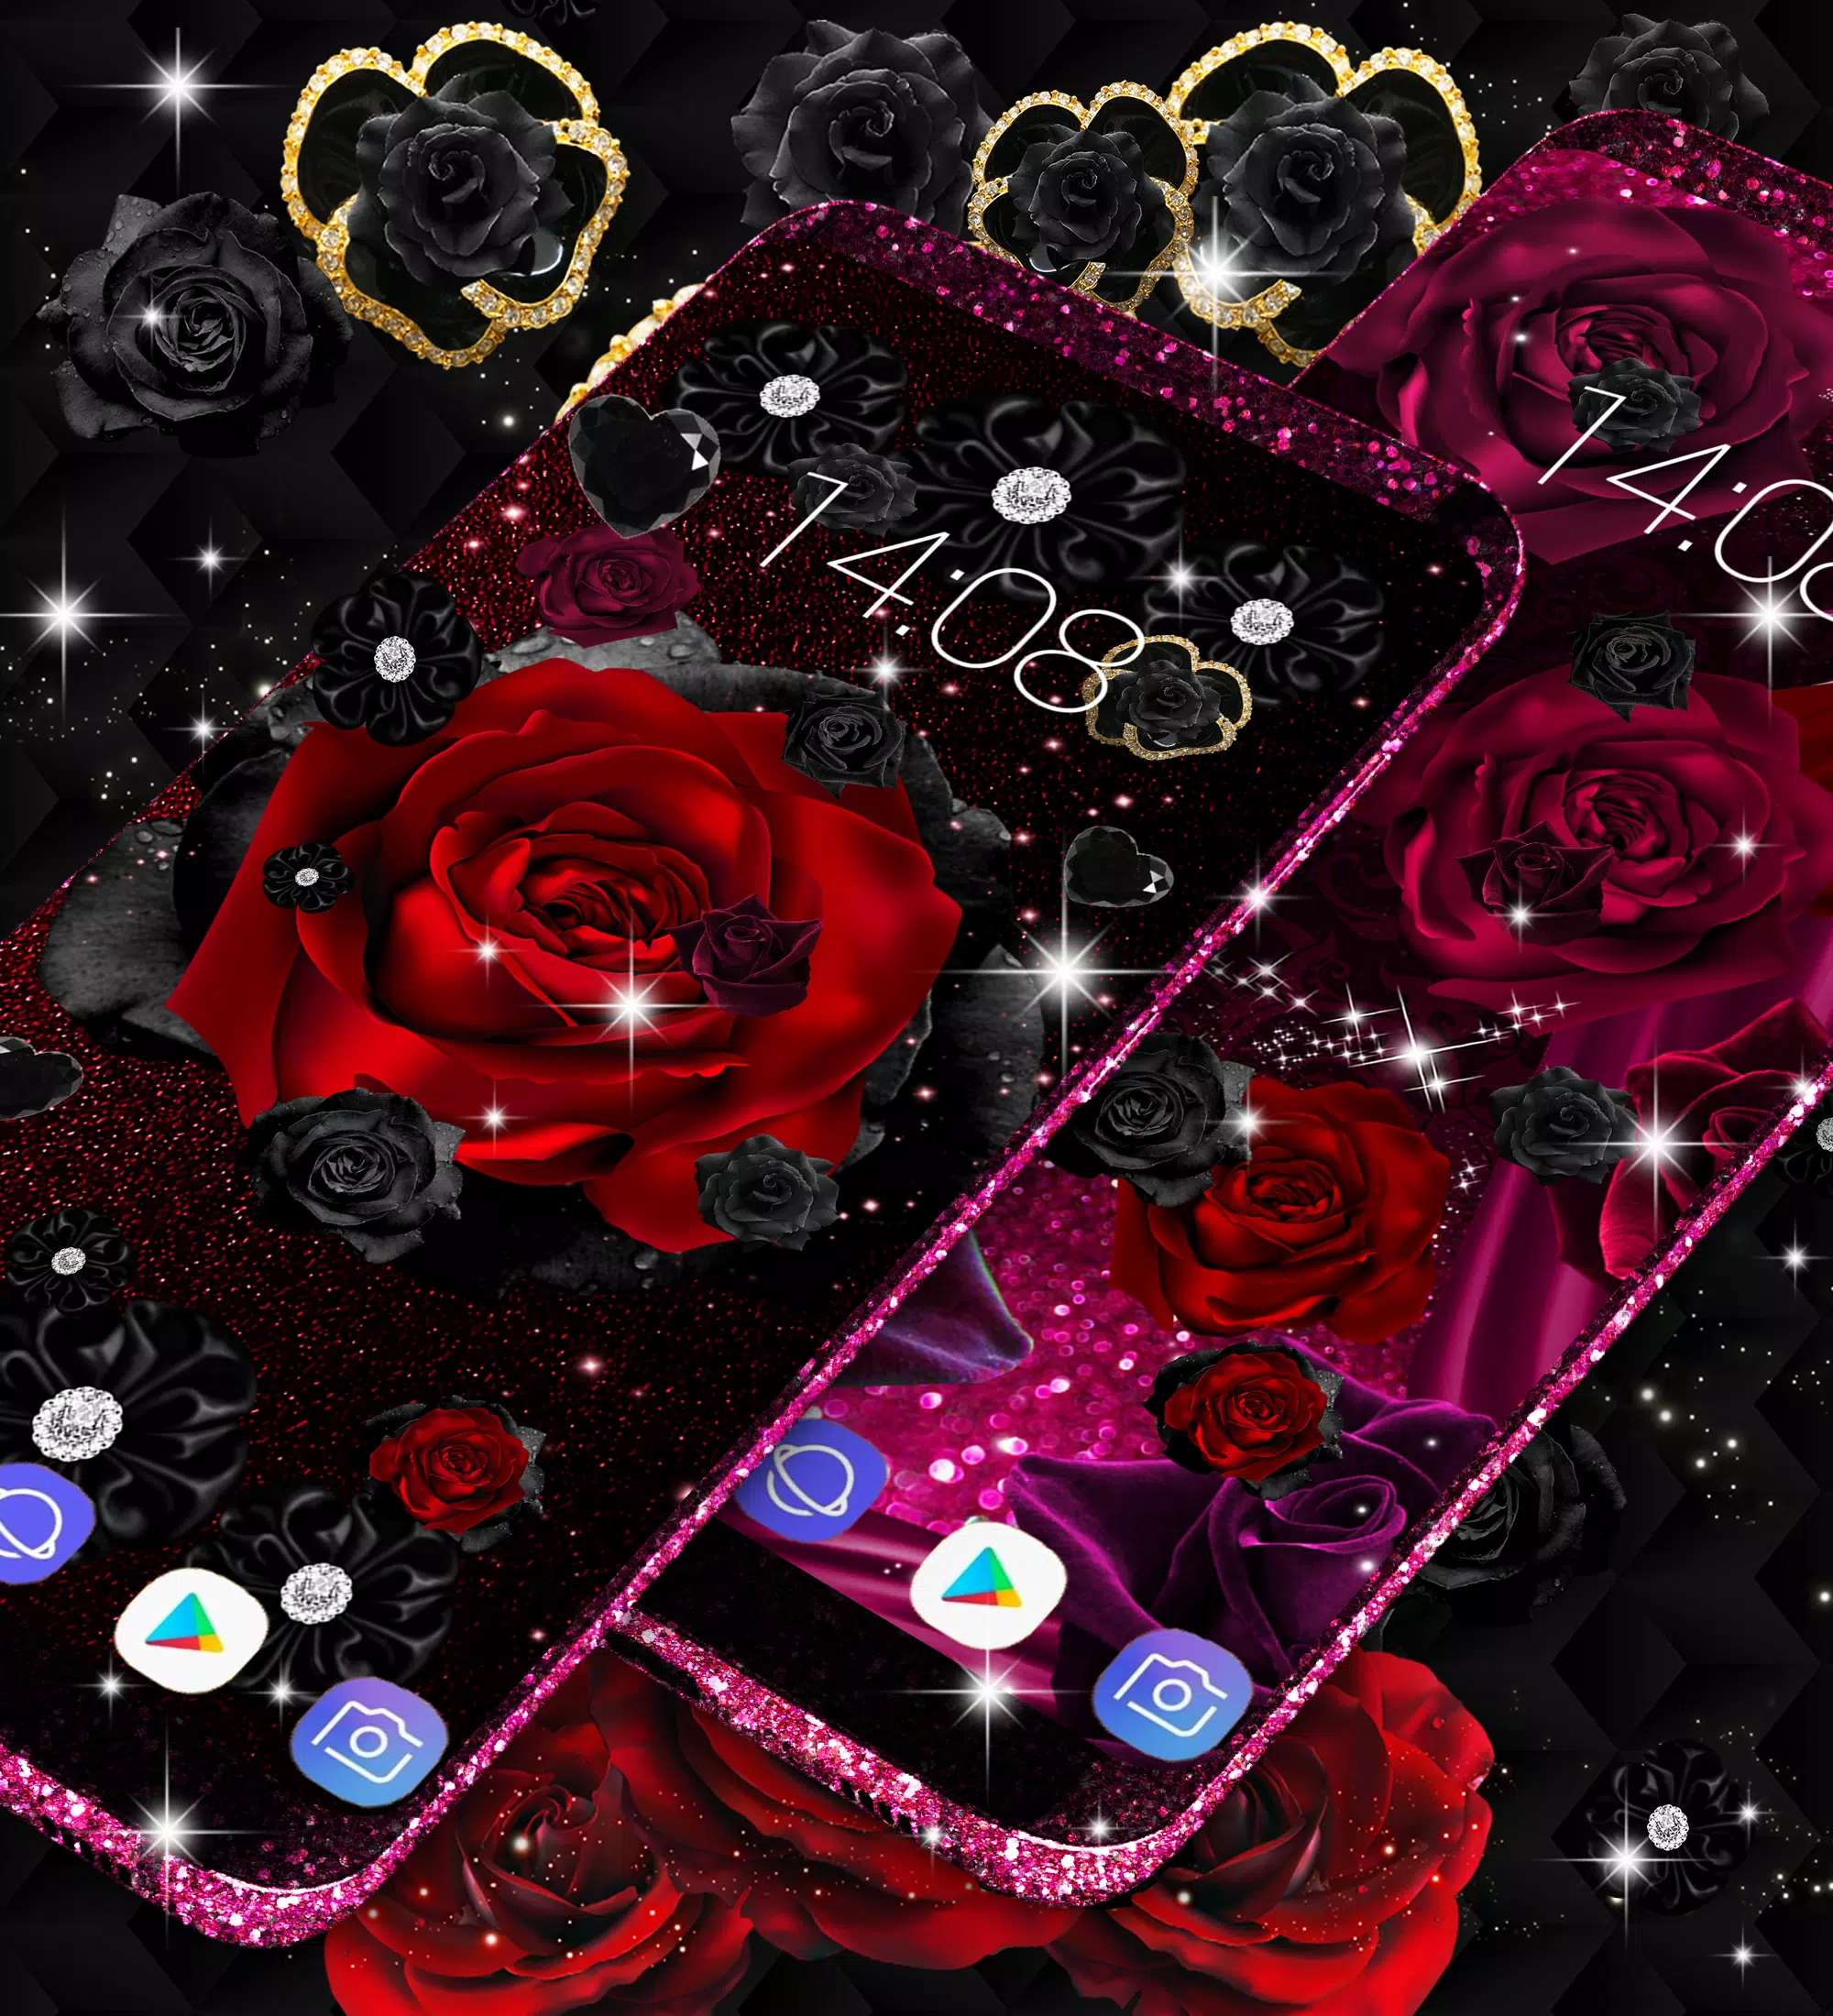 Black rose live wallpaper APK for Android Download